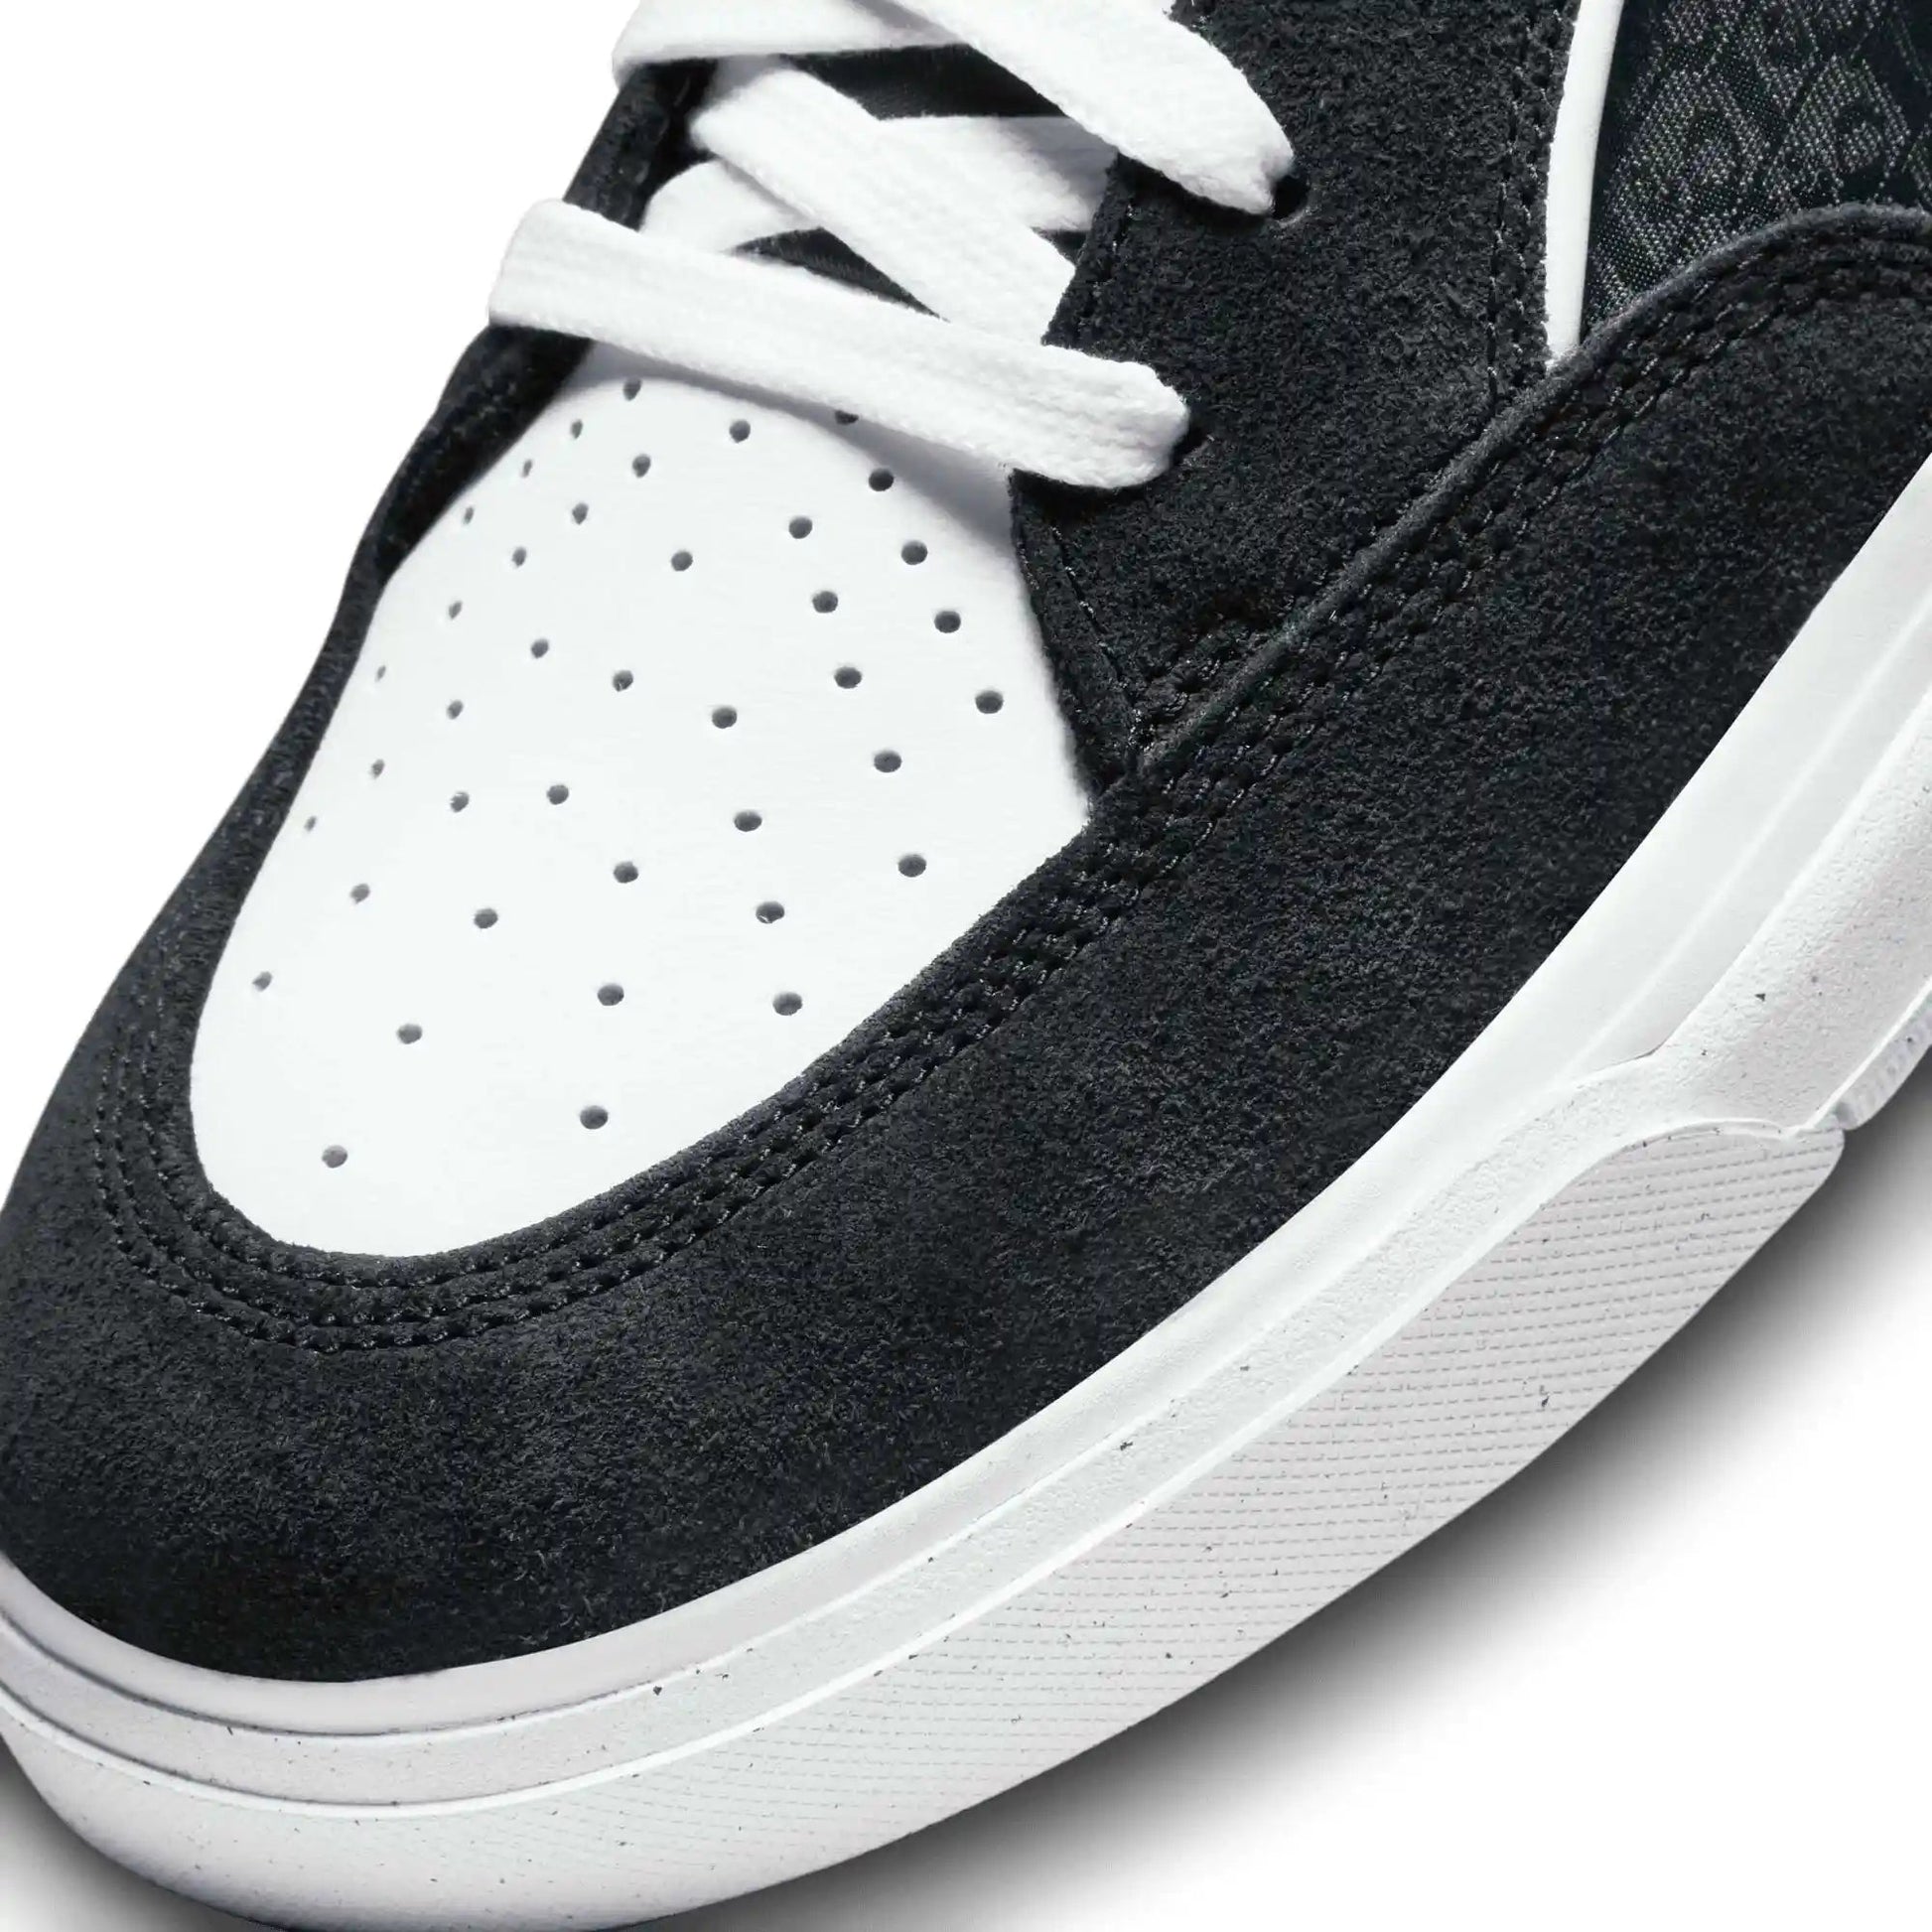 Nike SB React Leo, black/white-black-gum light brown - Tiki Room Skateboards - 12